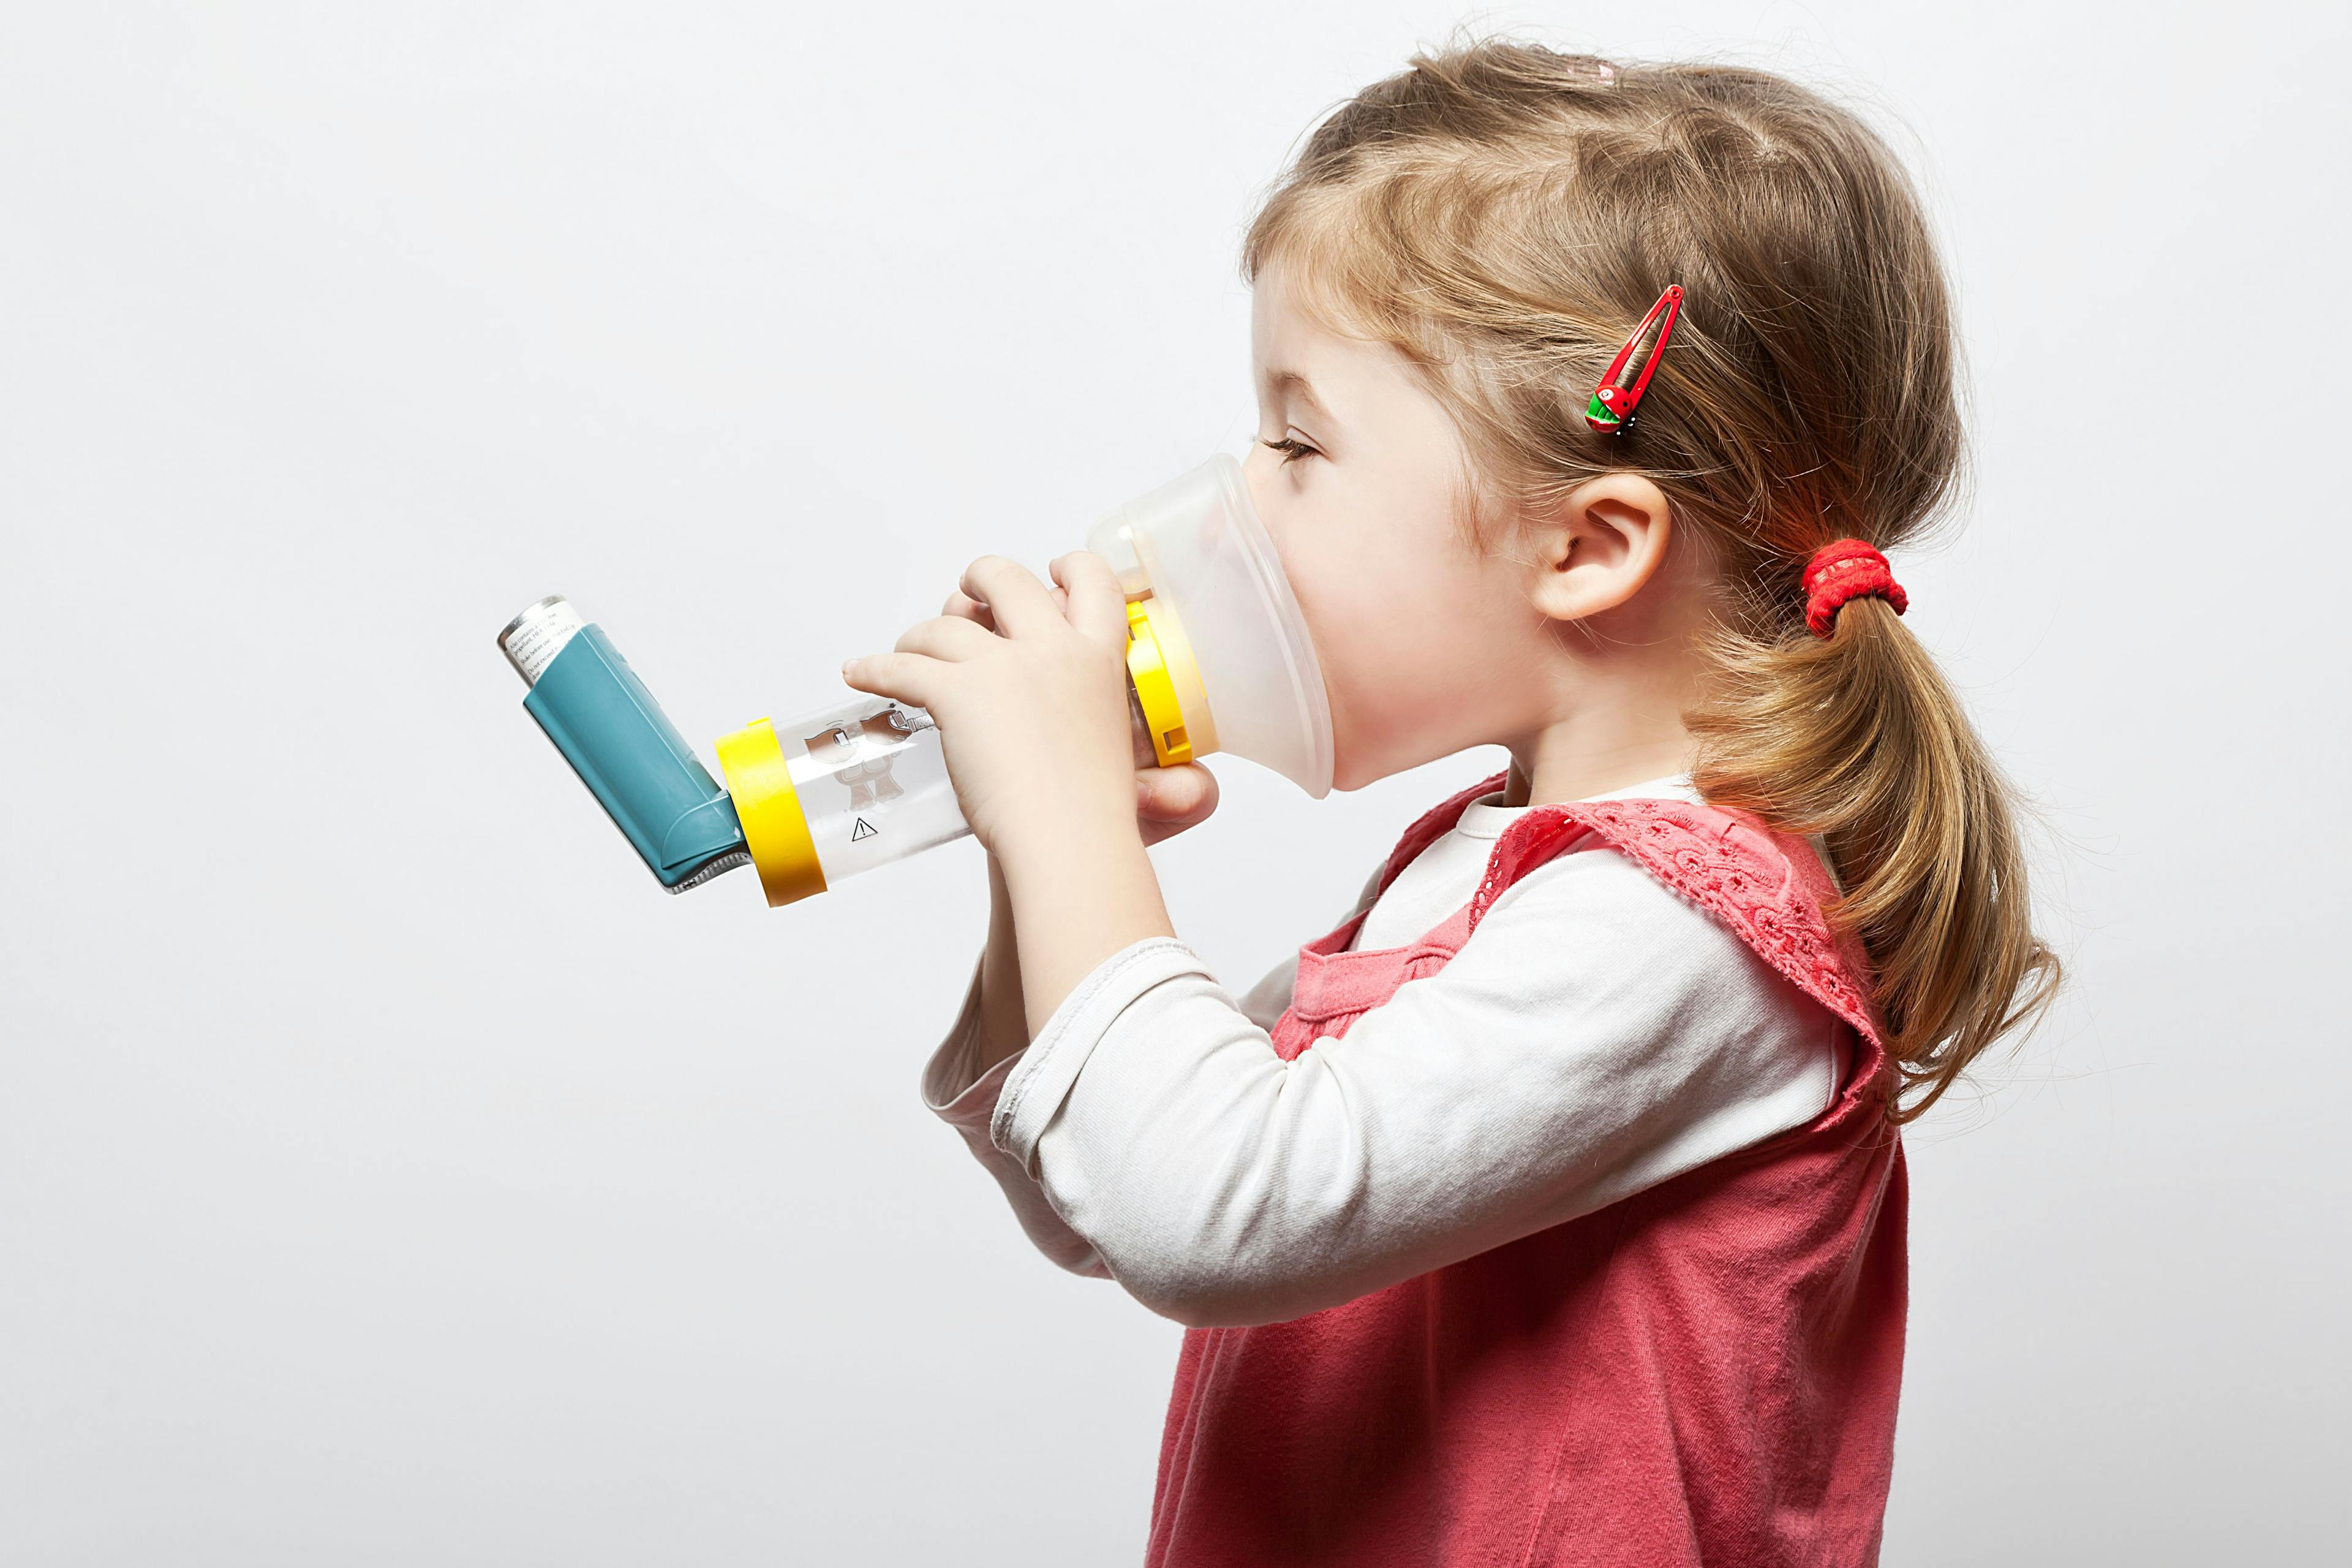 Asthma Pediatric | Image Credit: photomim - stock.adobe.com